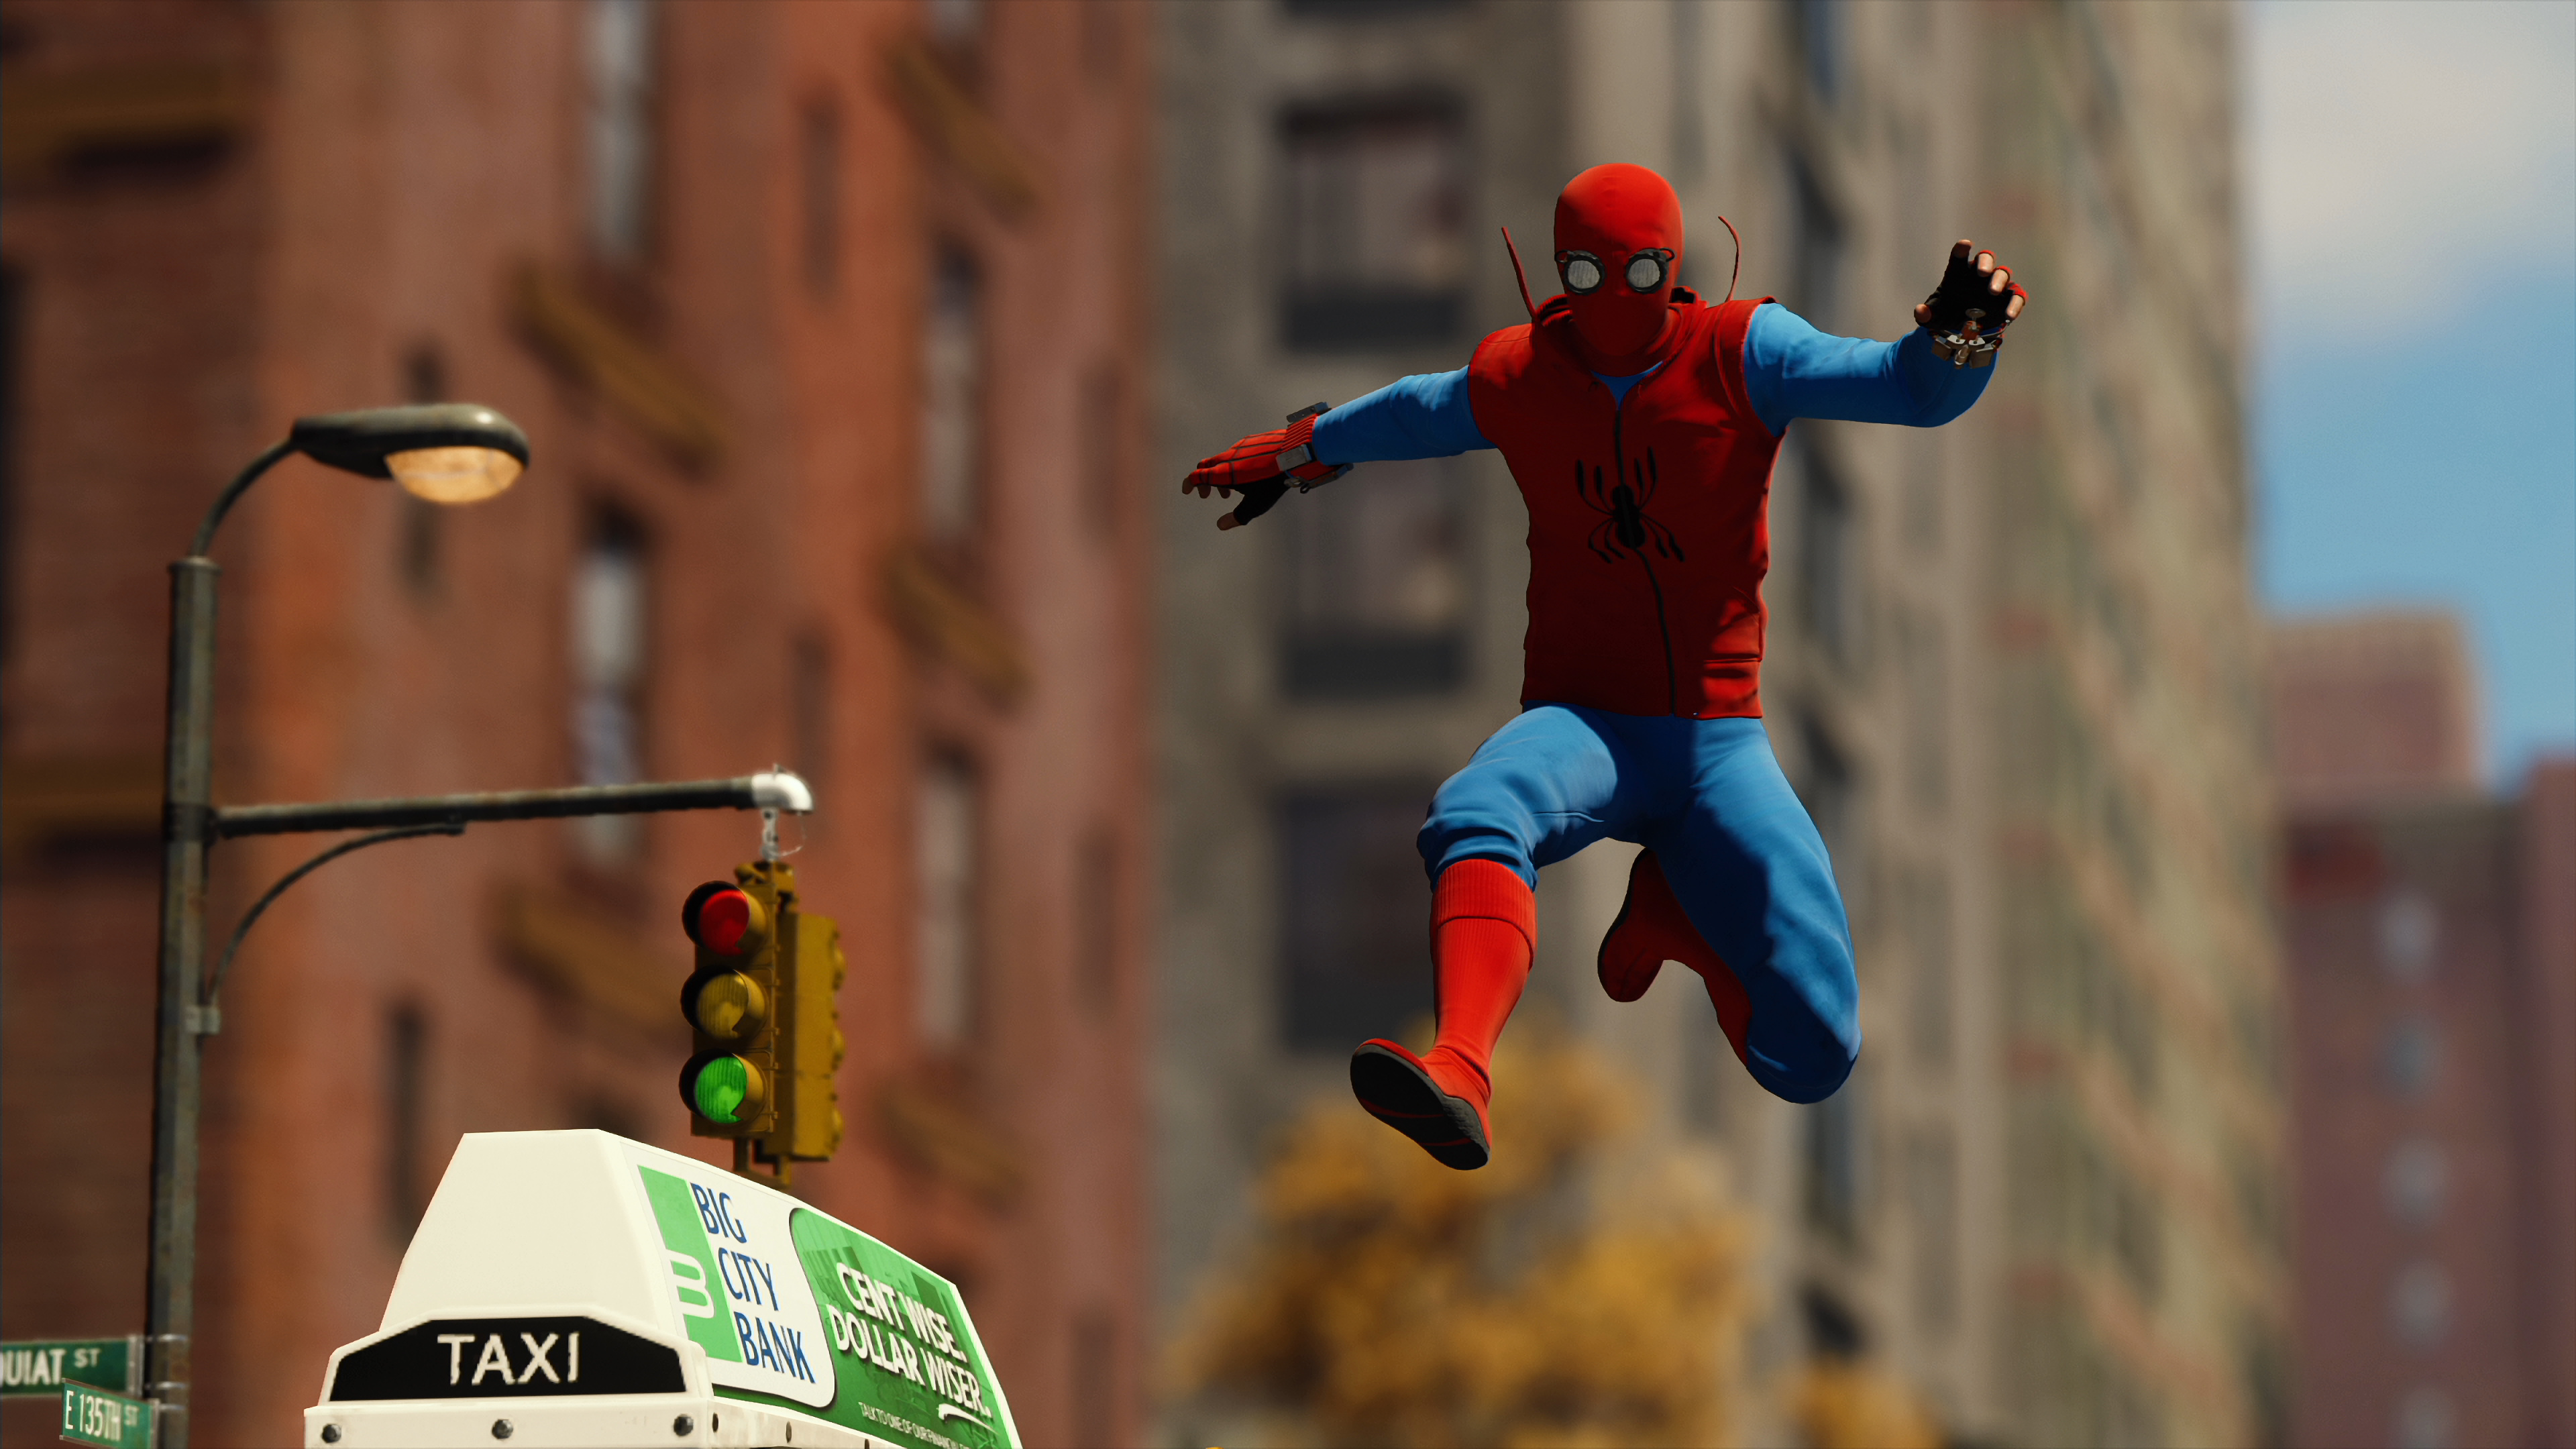 Spider Man (PS4) Homemade Suit 4k Ultra HD Wallpaper